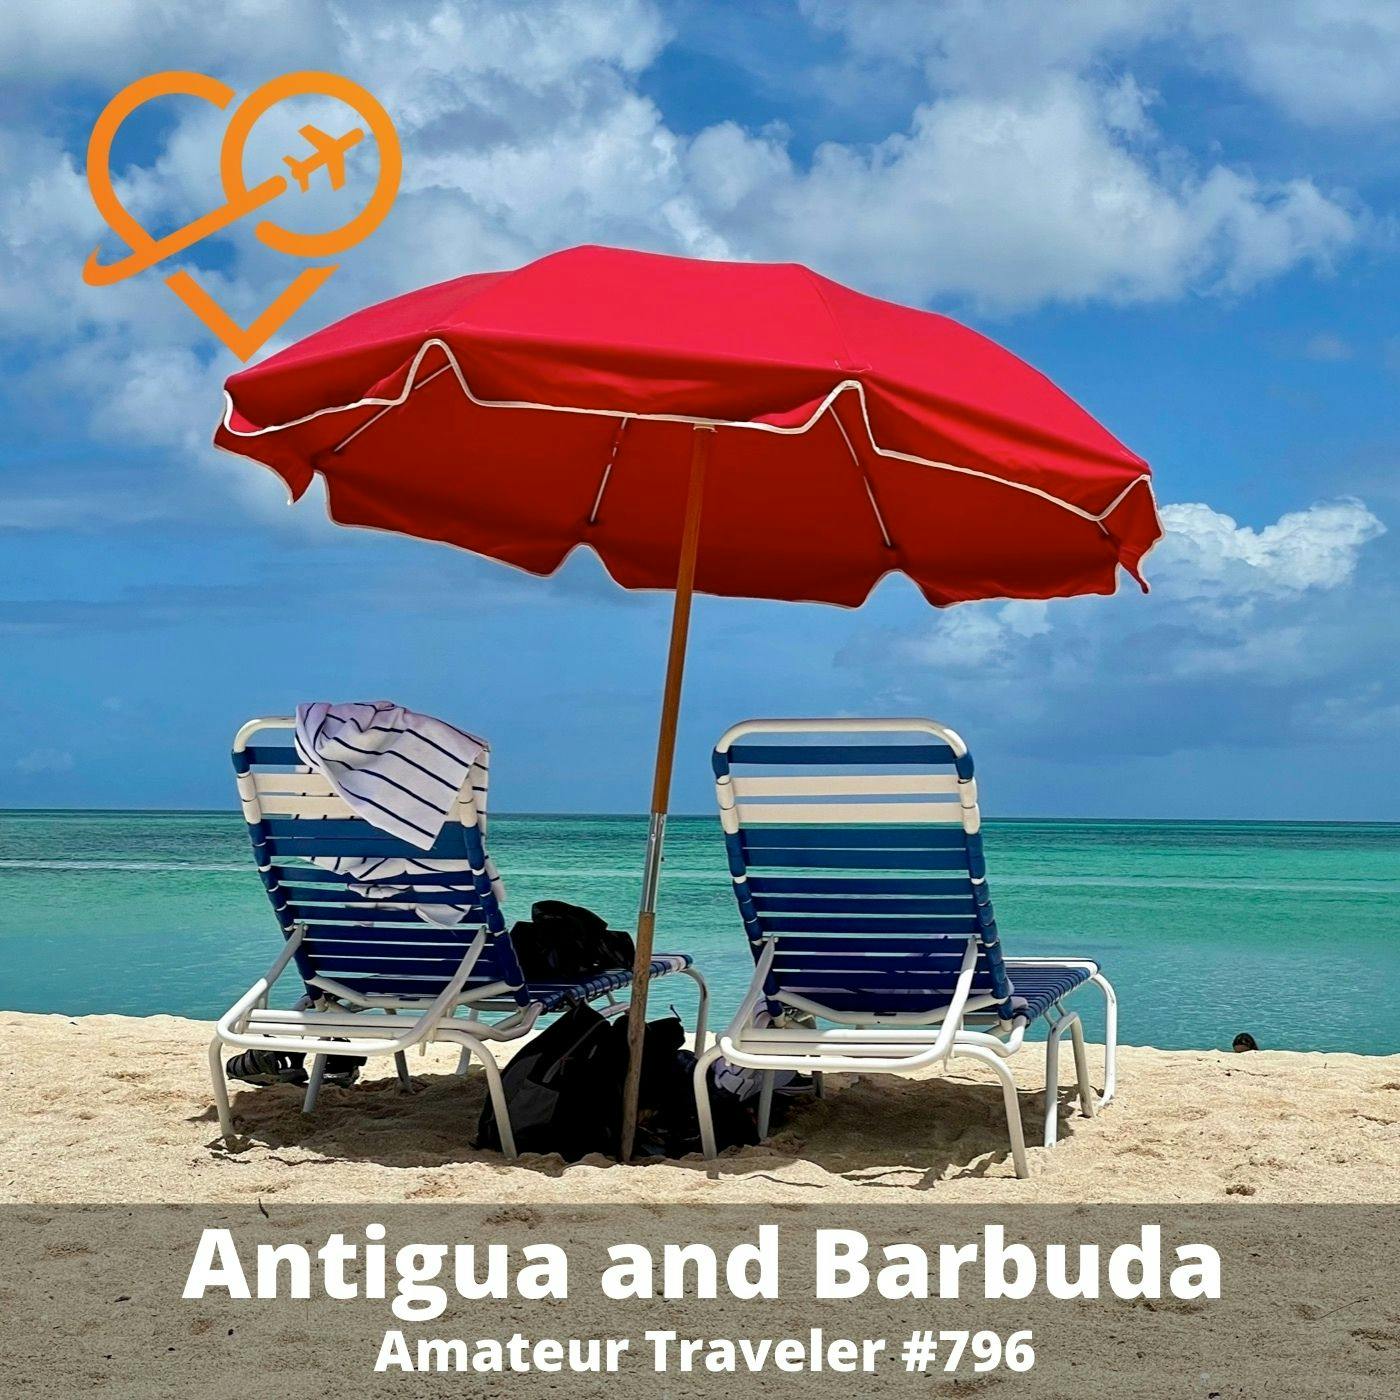 AT#796 - Travel to Antigua and Barbuda